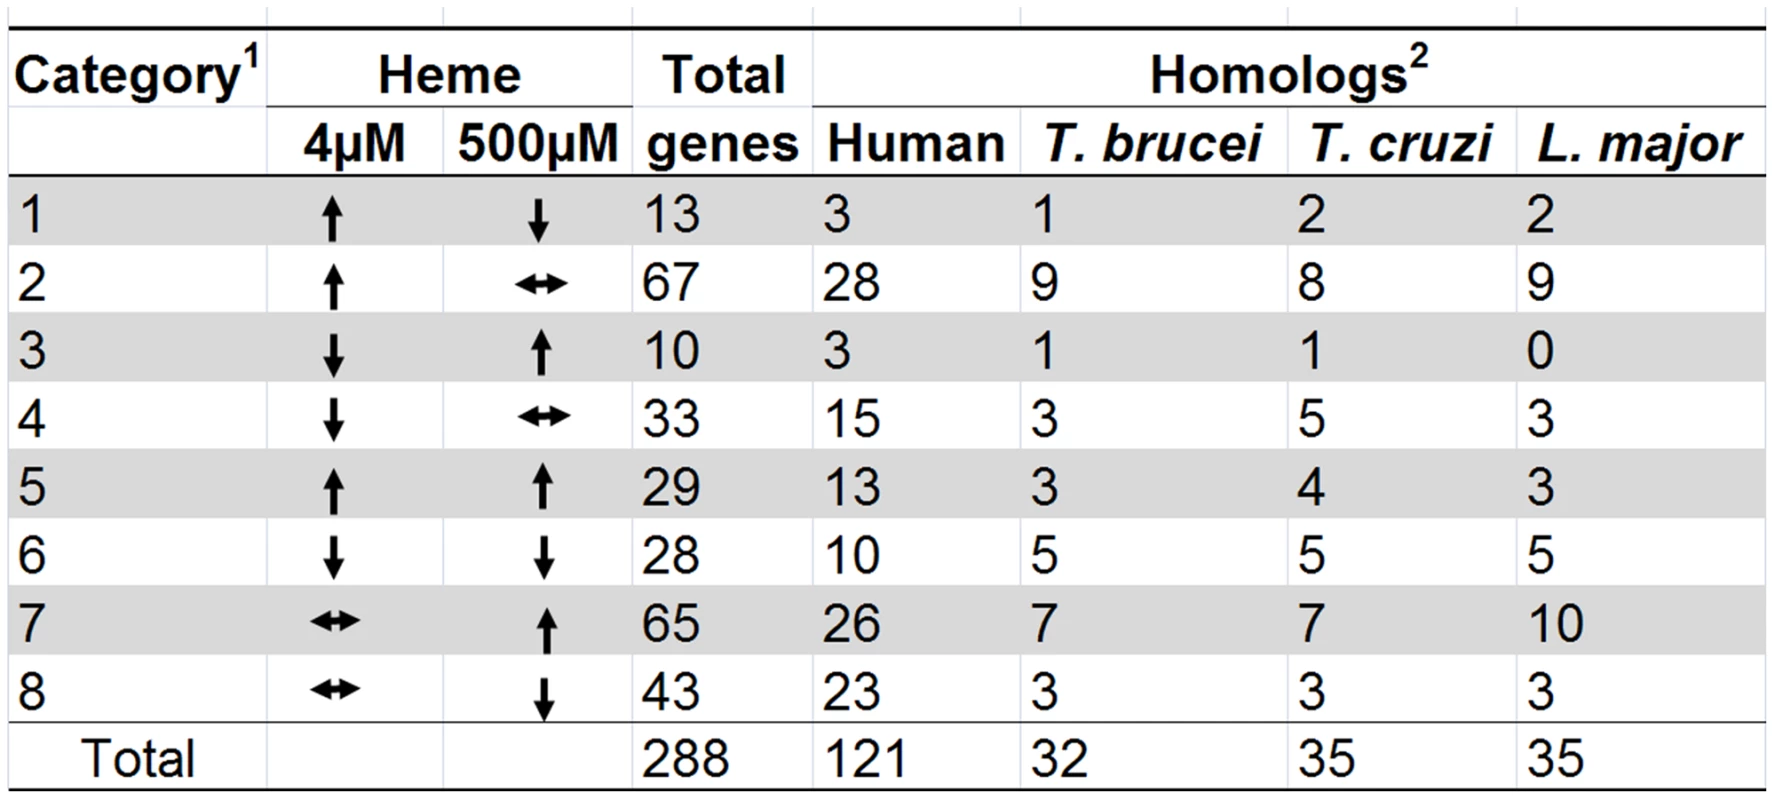 Heme-dependent changes in gene expression.